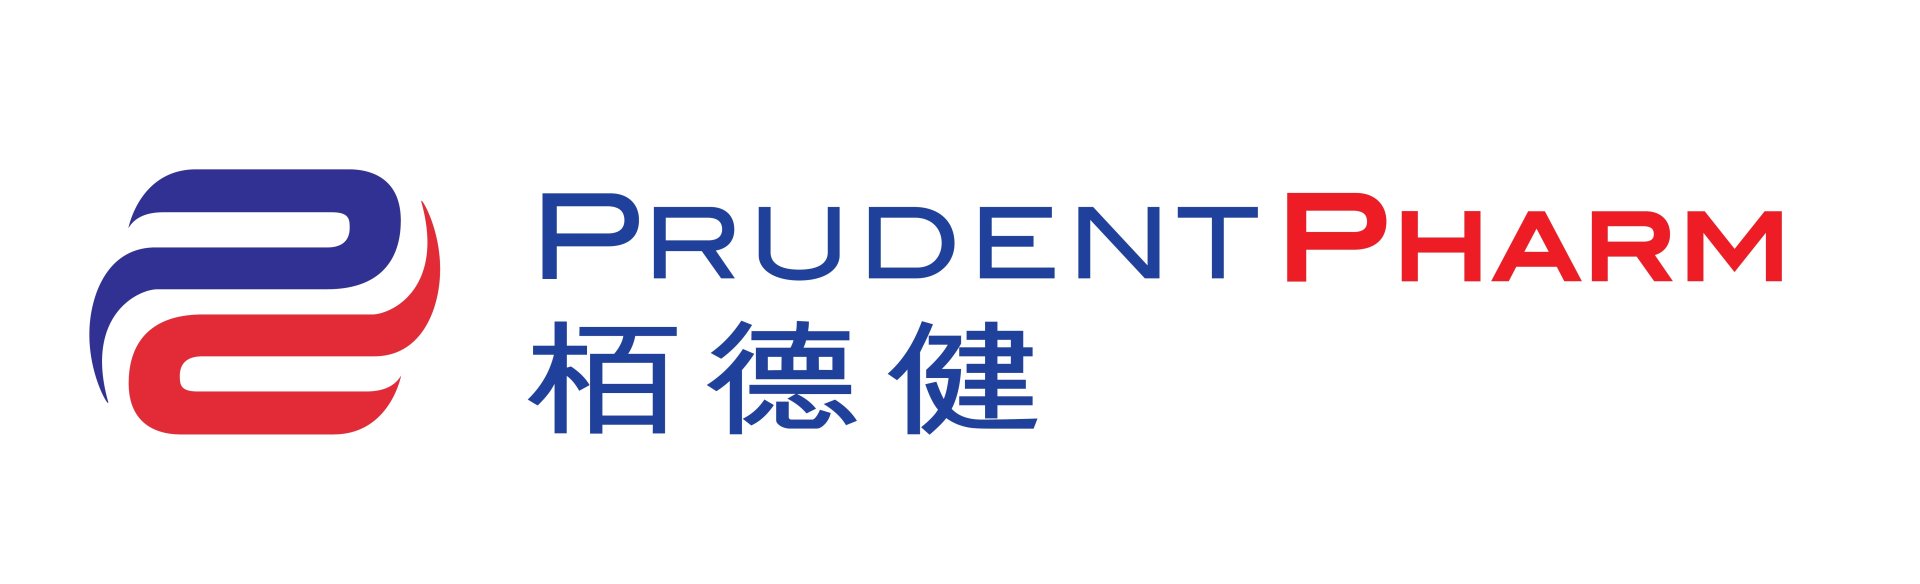 Prudent Pharm logo